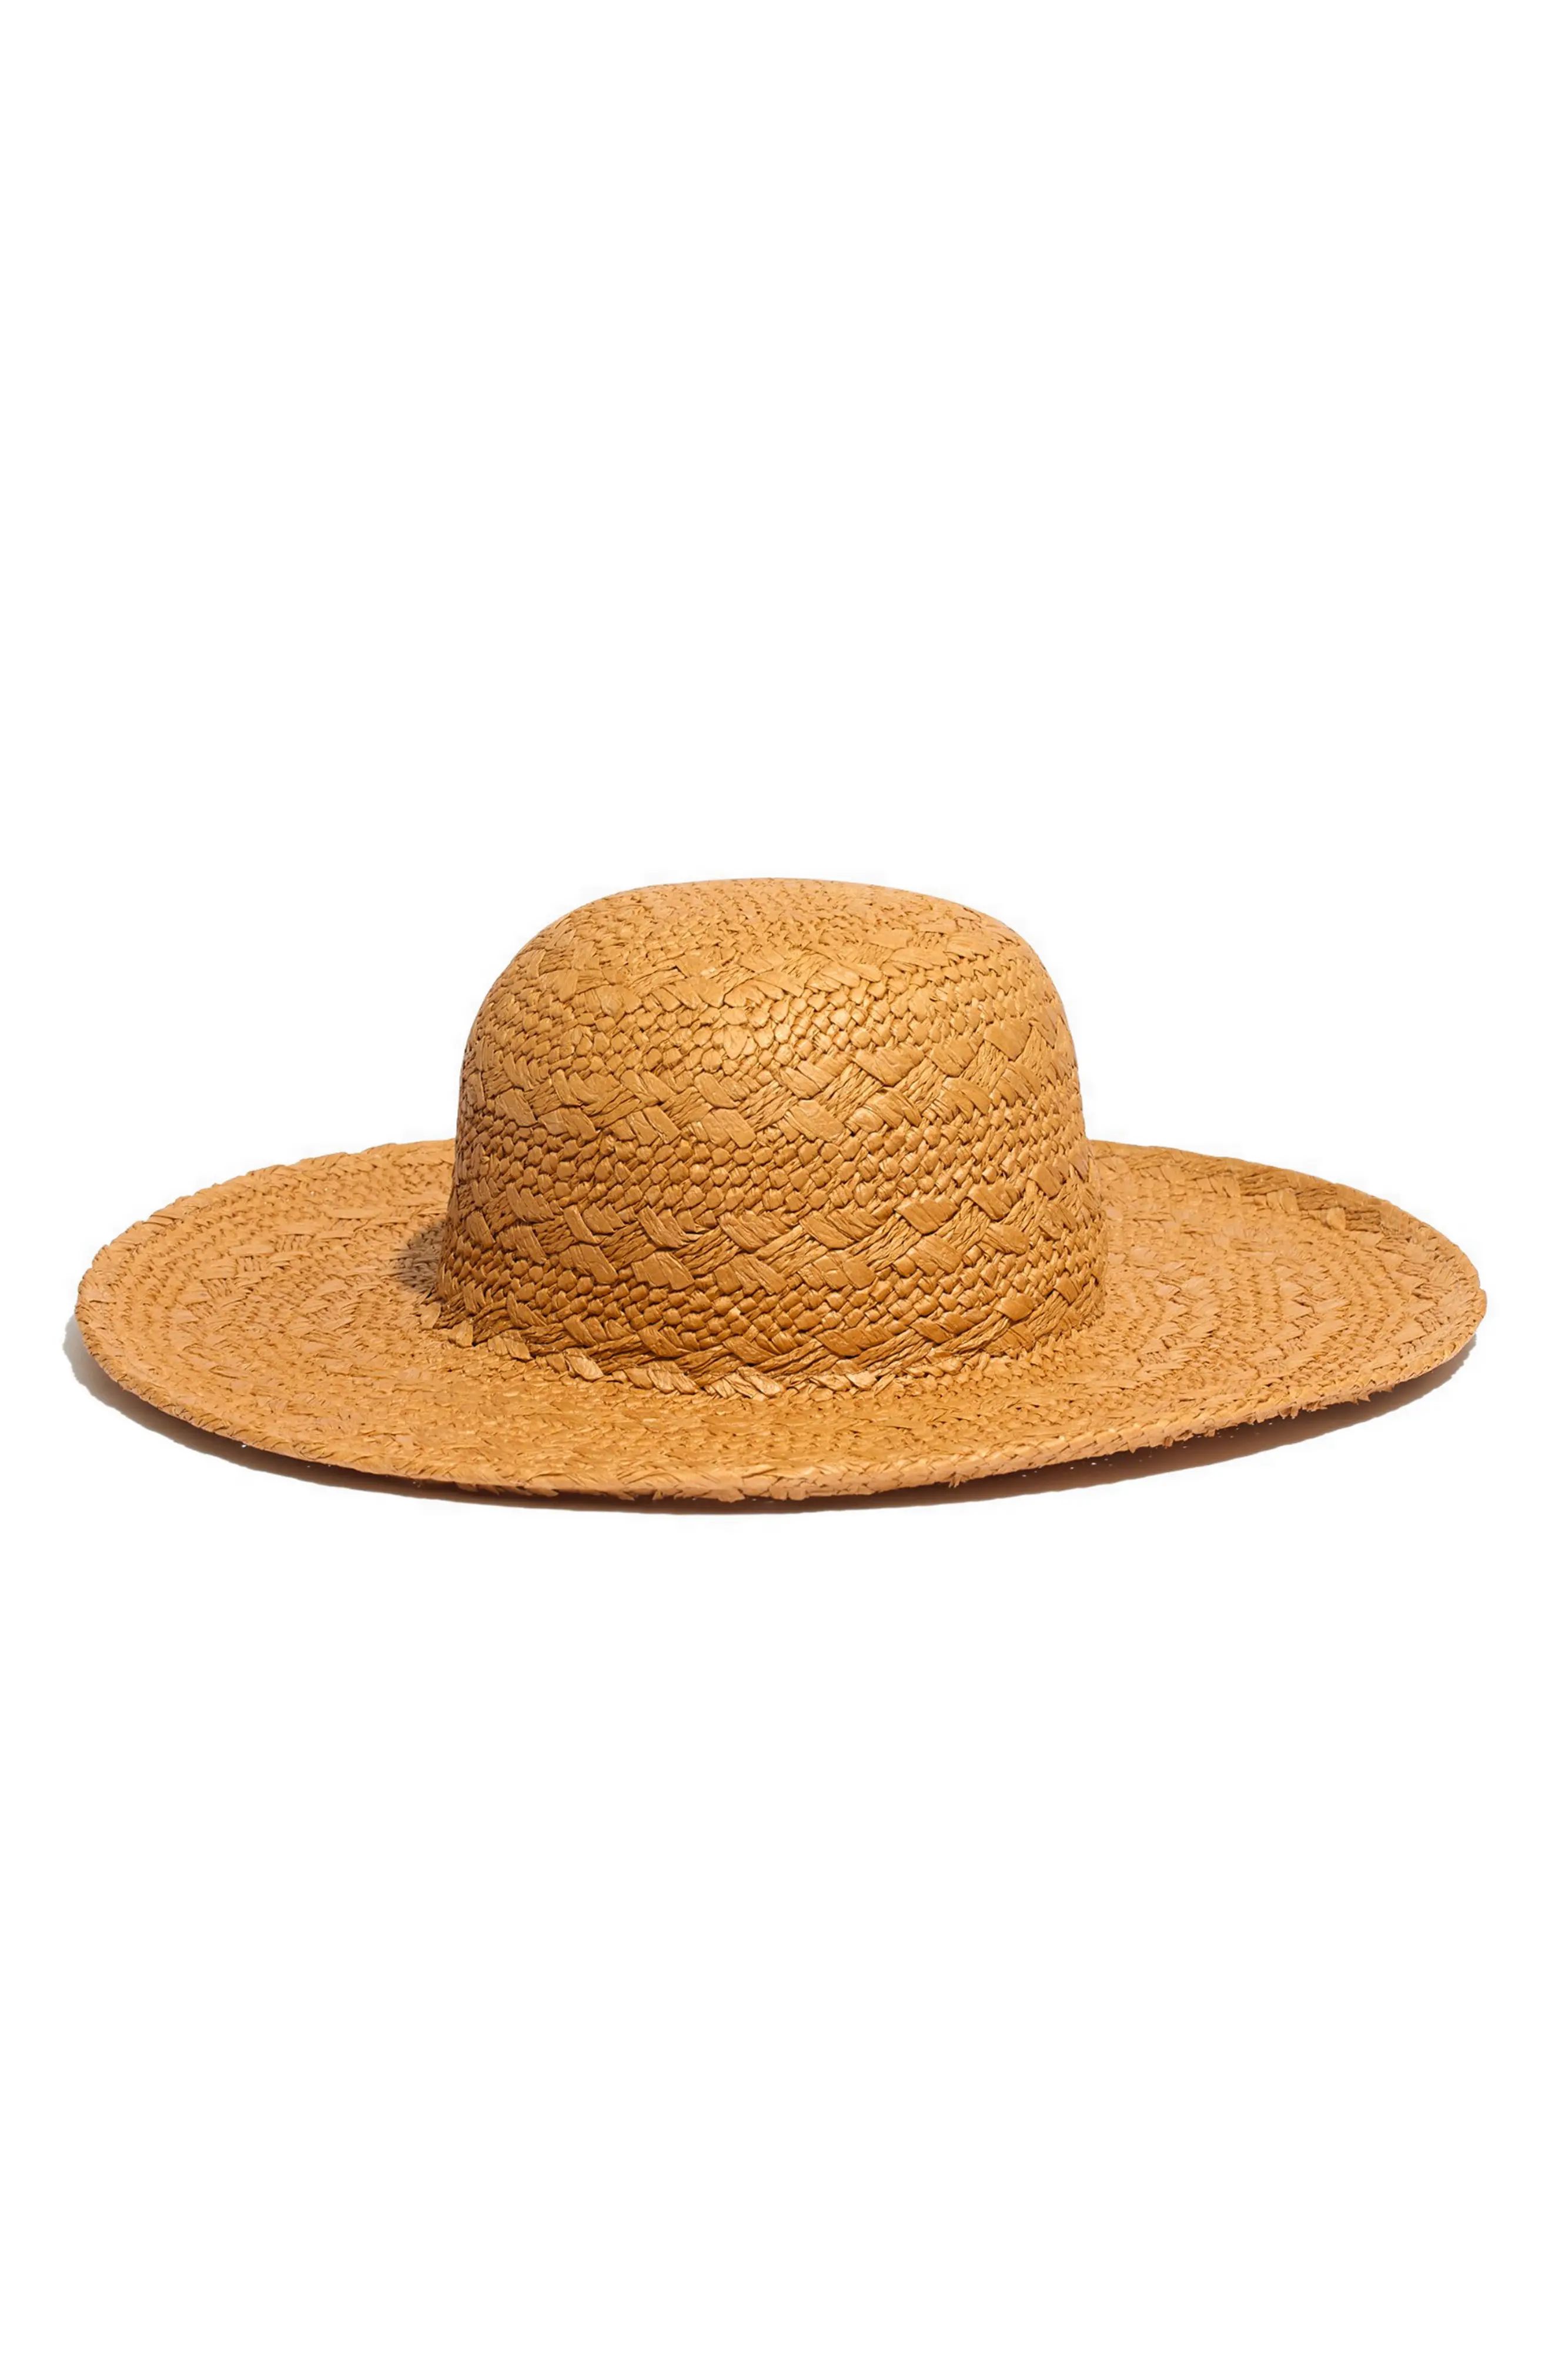 Women's Madewell Braided Straw Sun Hat, Size Medium/Large - Beige | Nordstrom